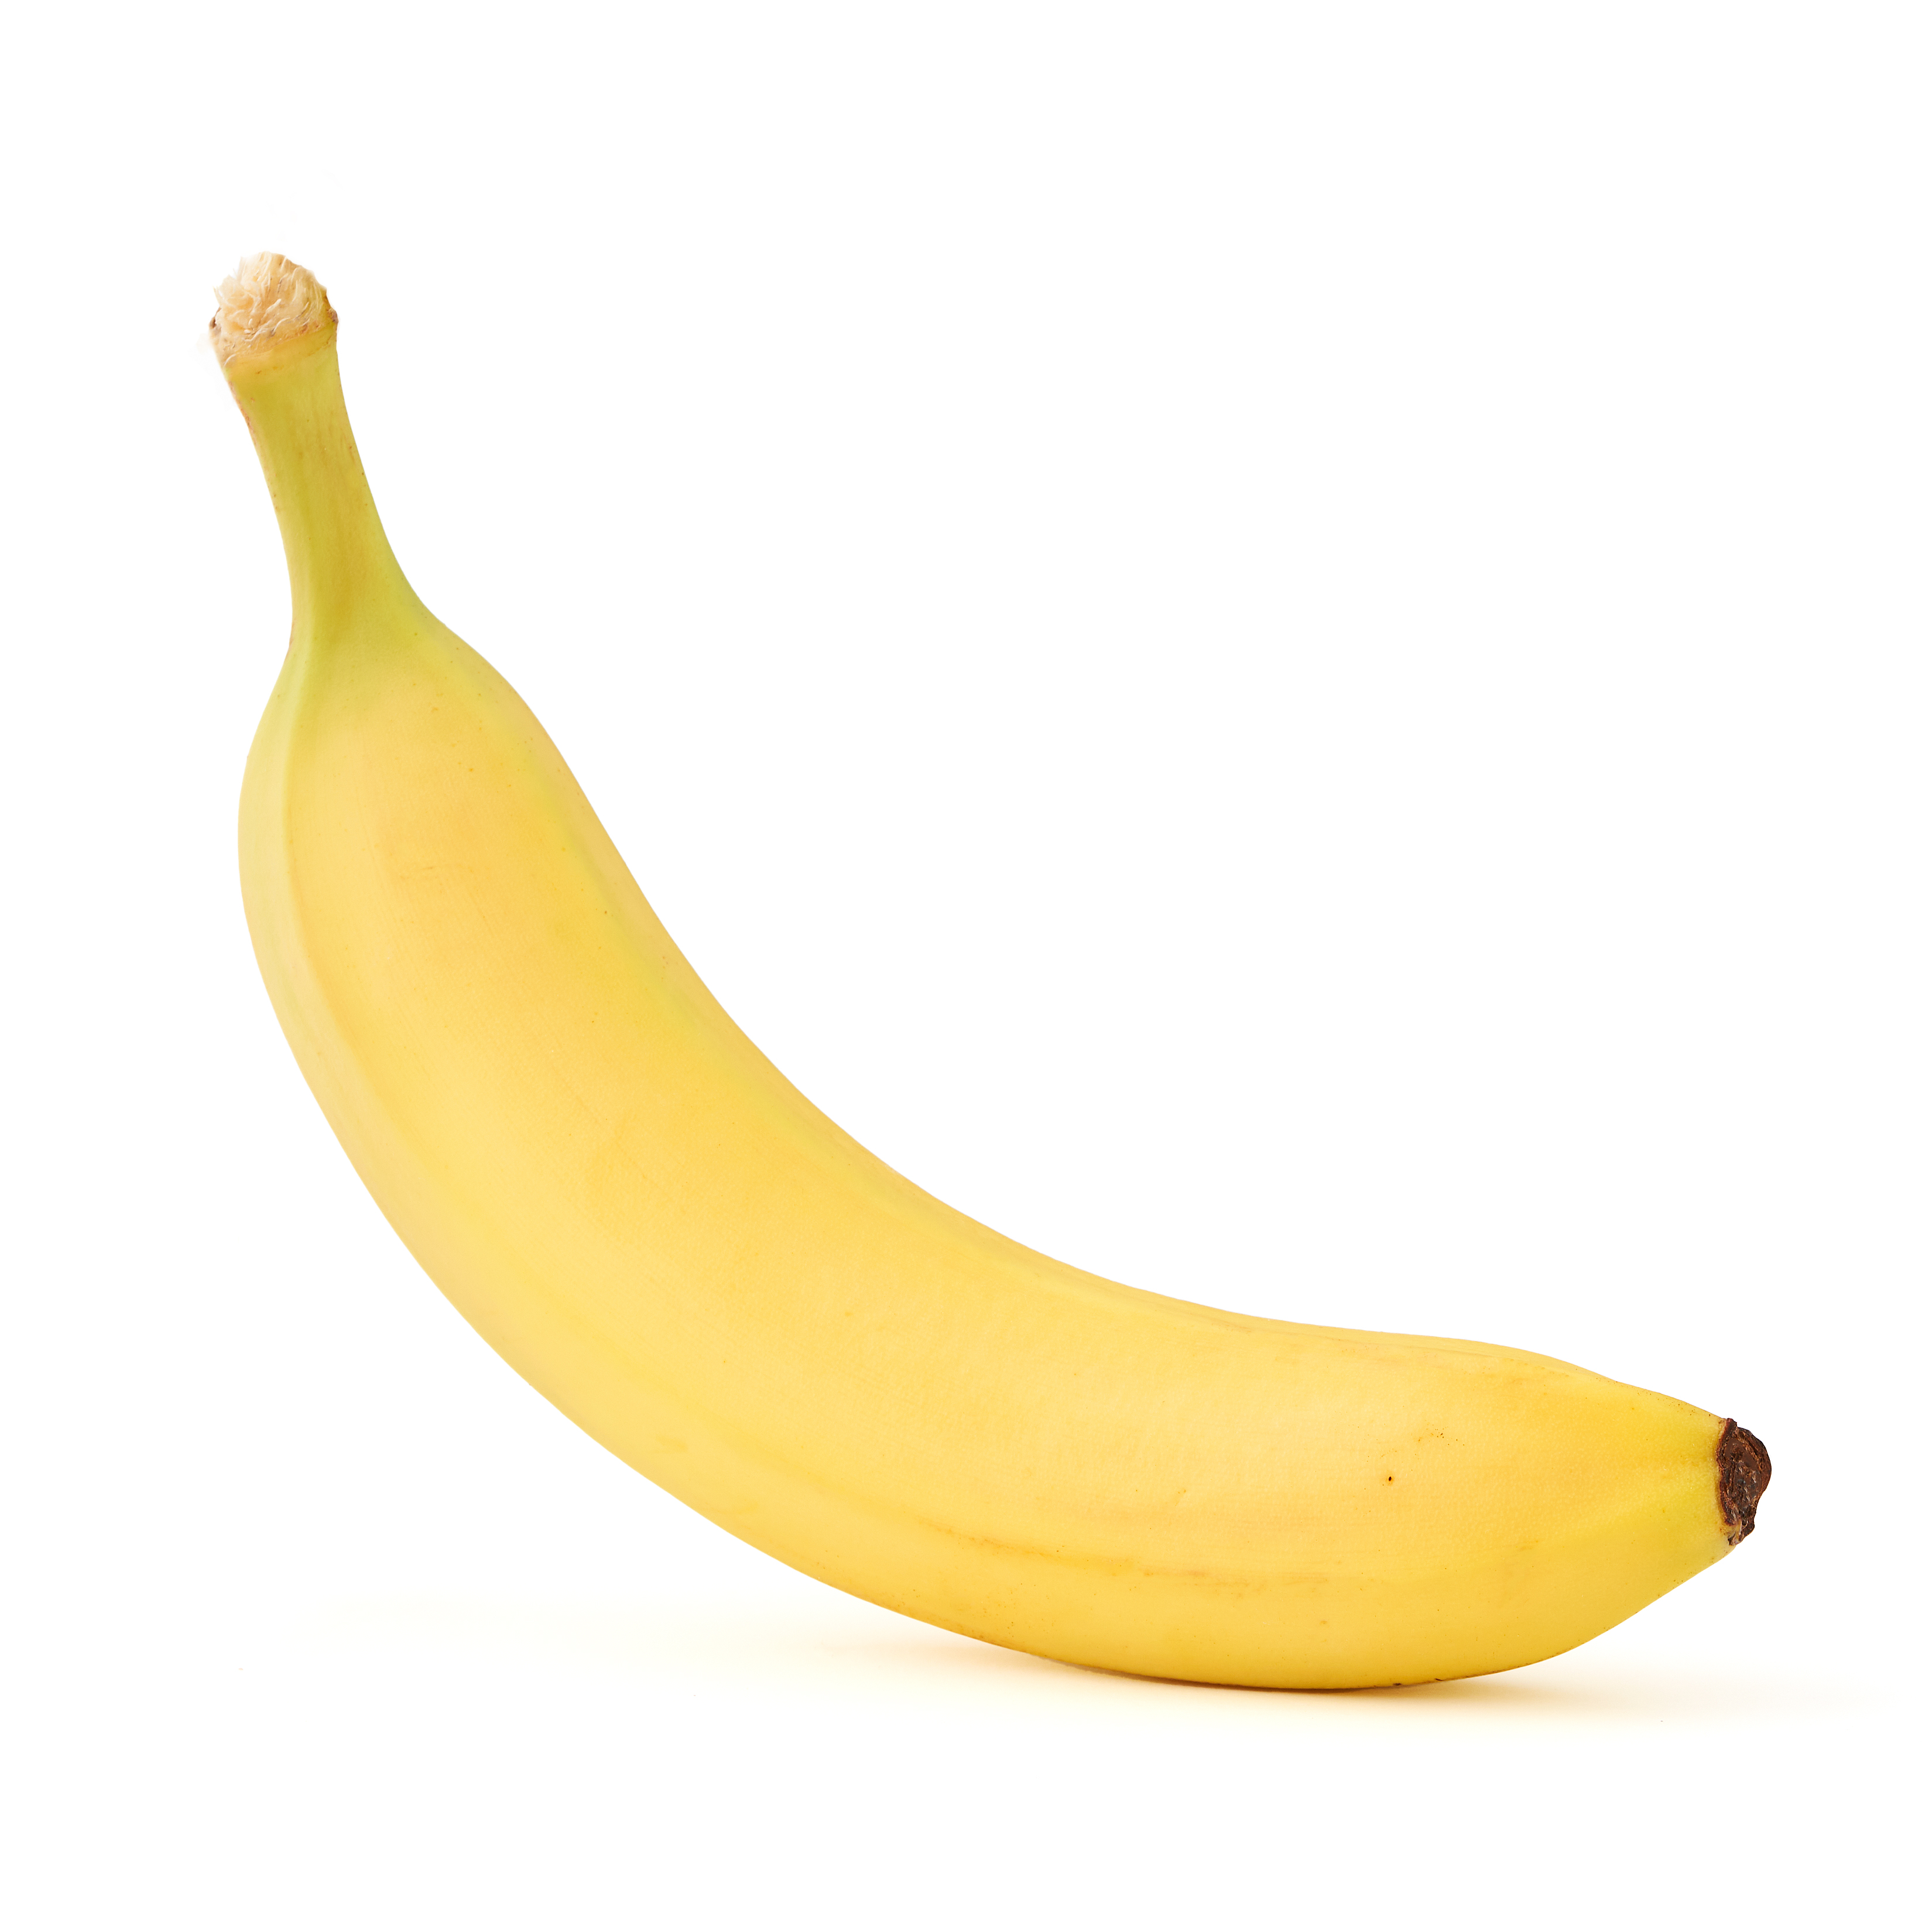 Fresh Banana Fruit, Each - image 1 of 7